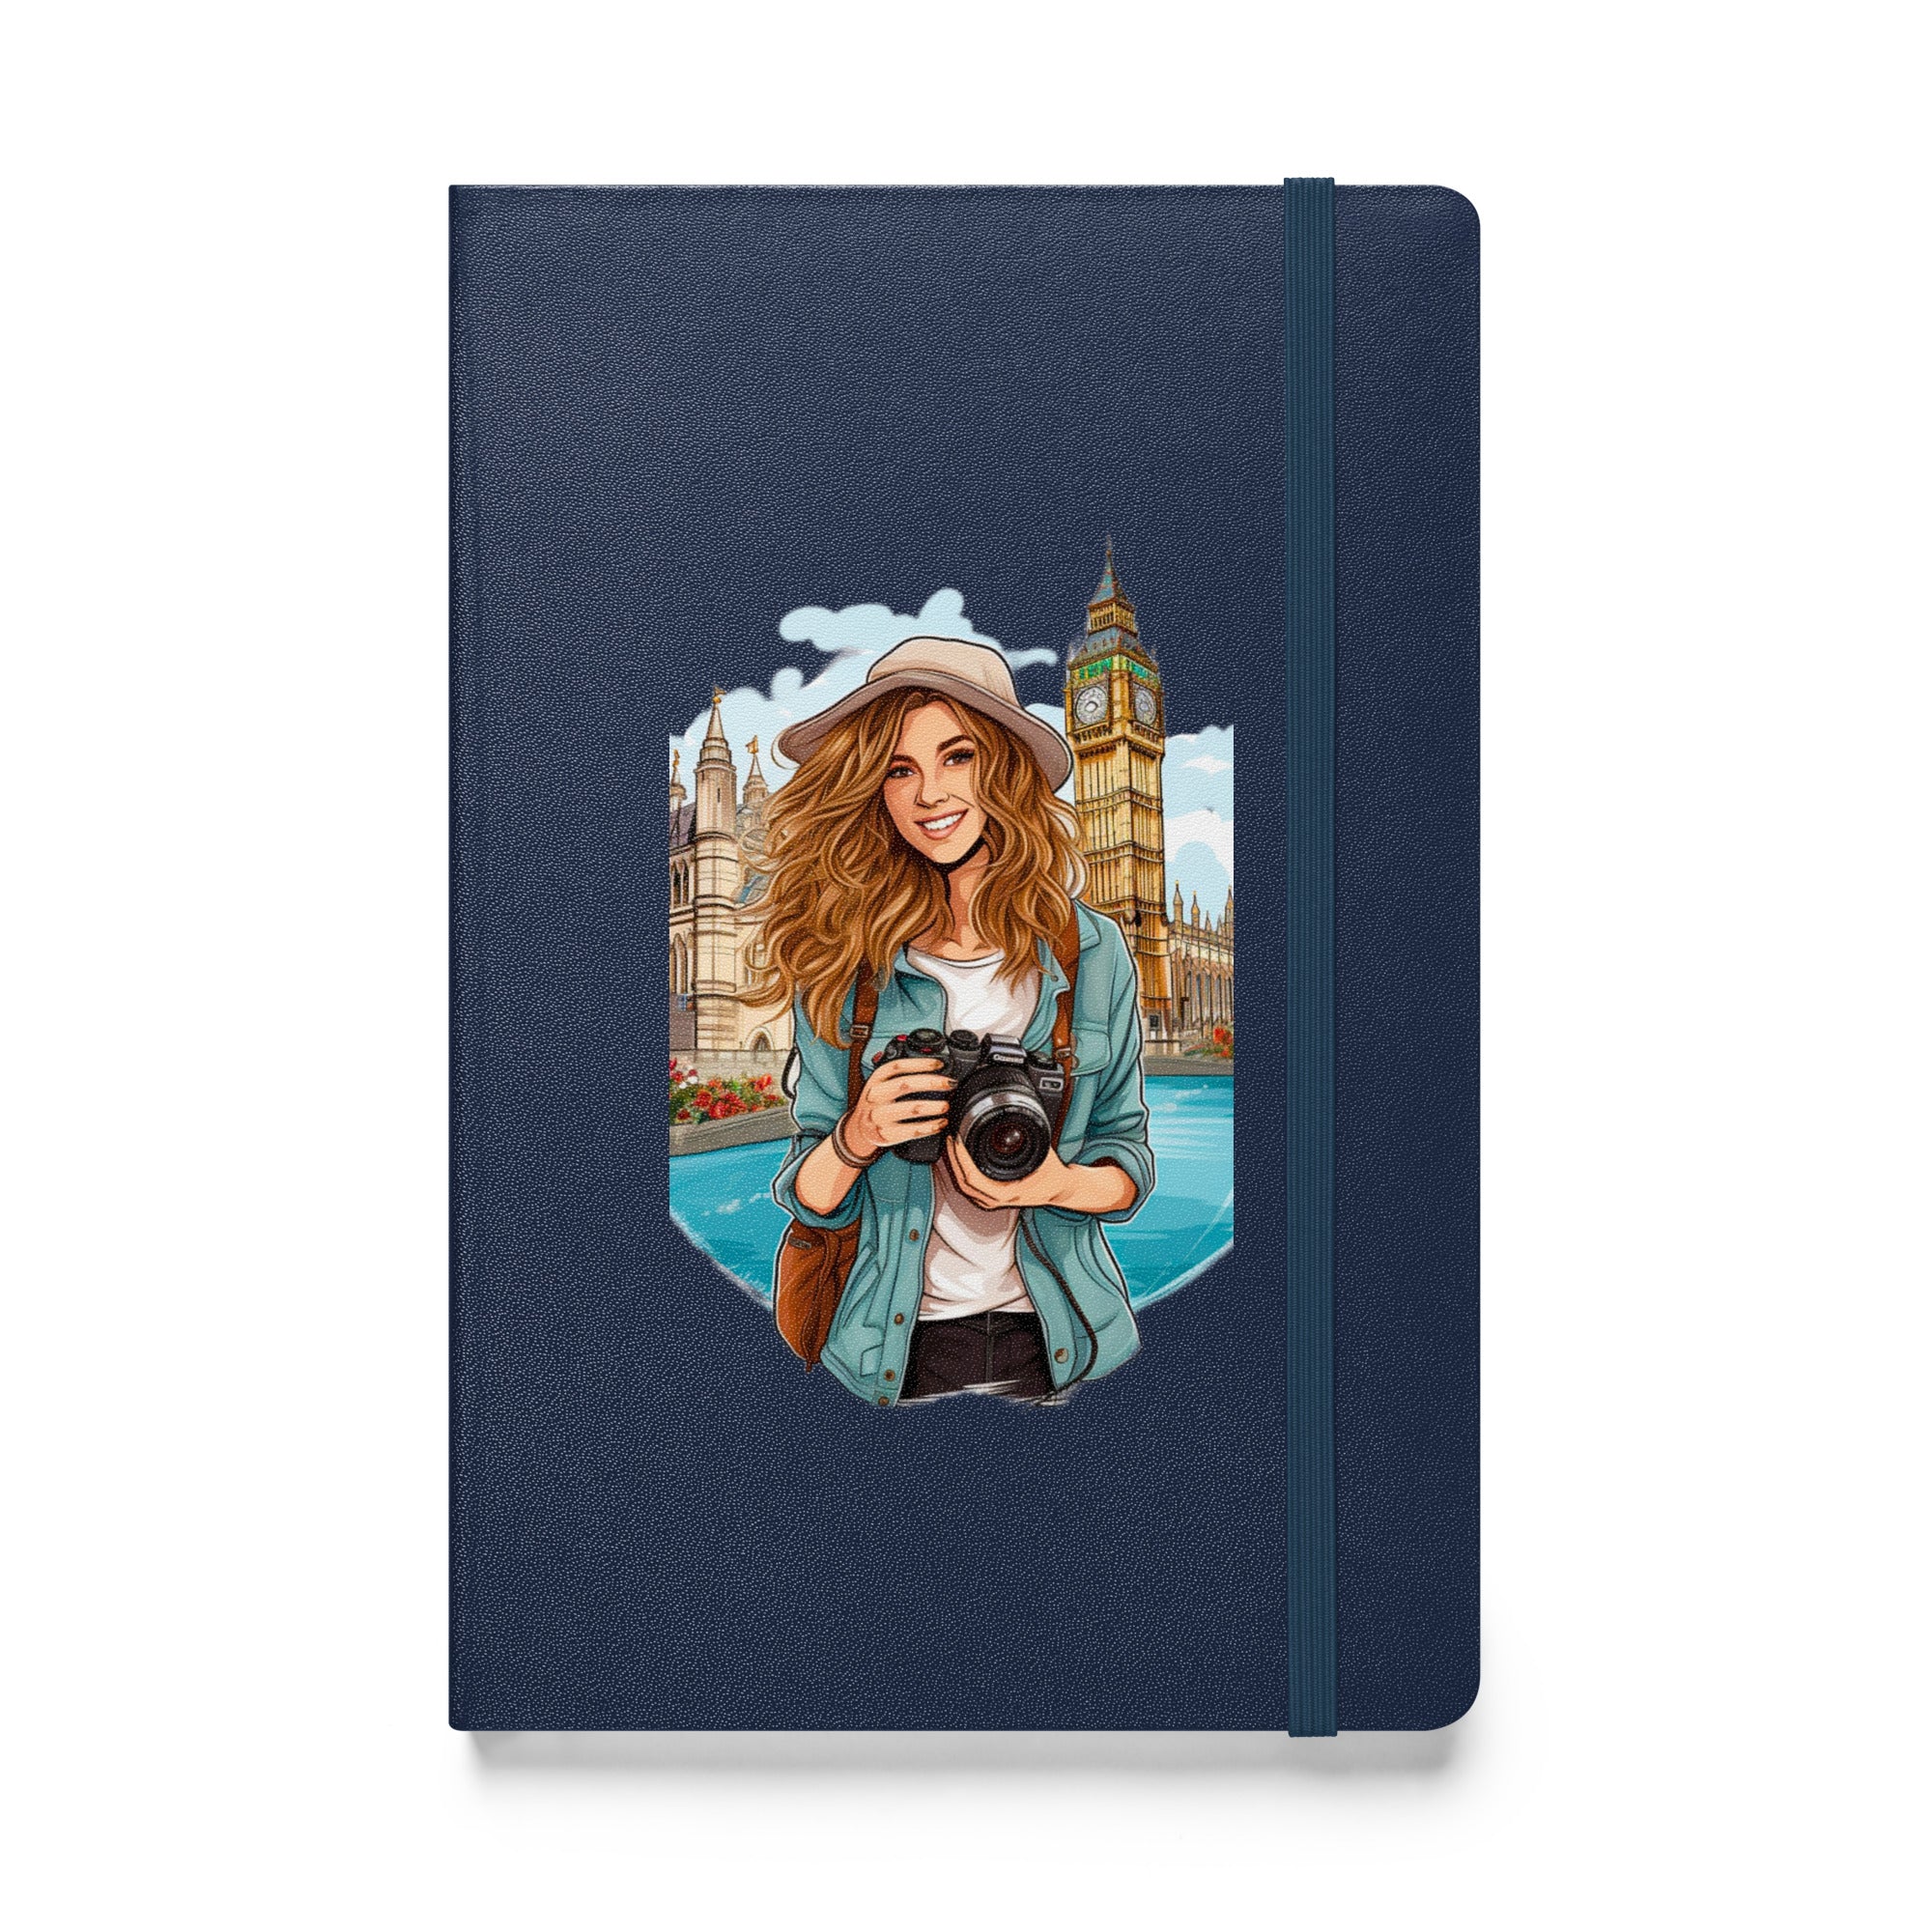 London Travel Photographer - Hardcover Notebook